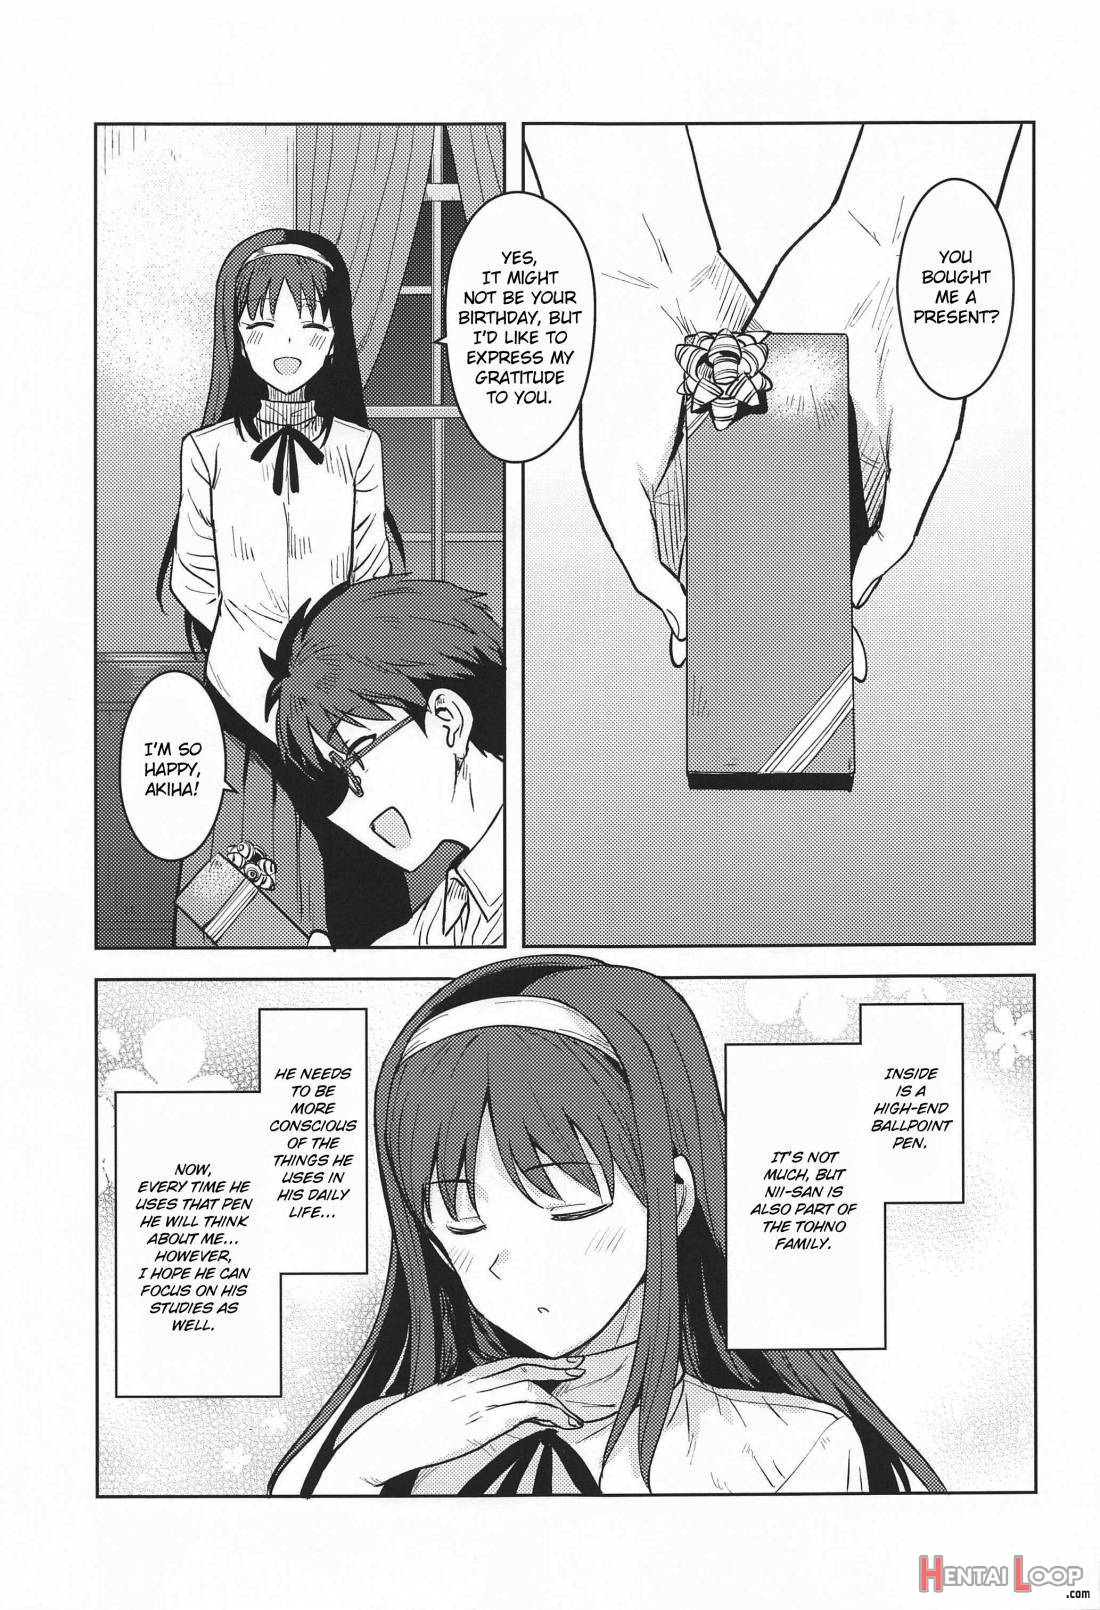 Akiha-sama No Present page 2